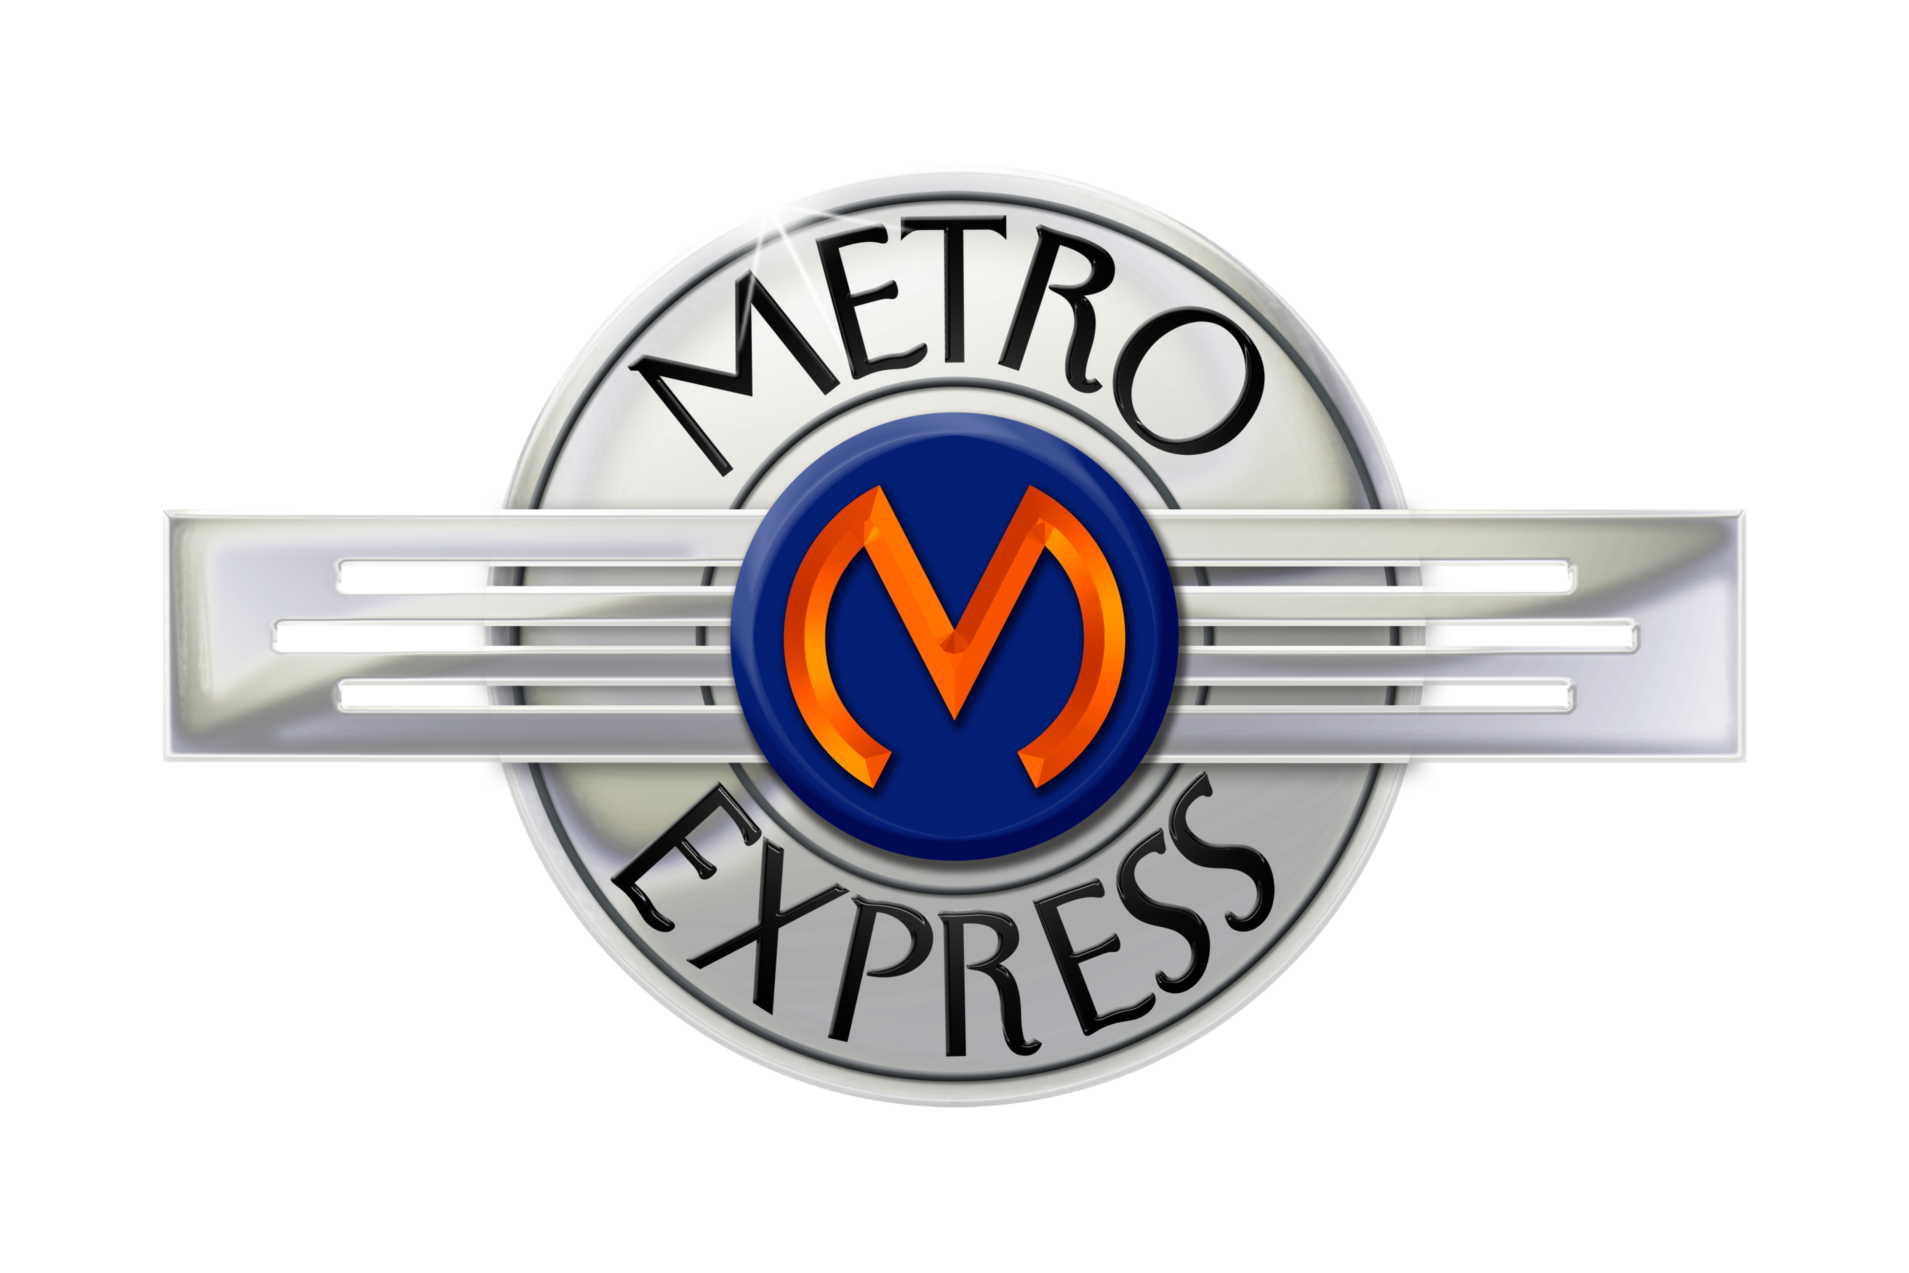 Metro Express Car Wash Company Logo